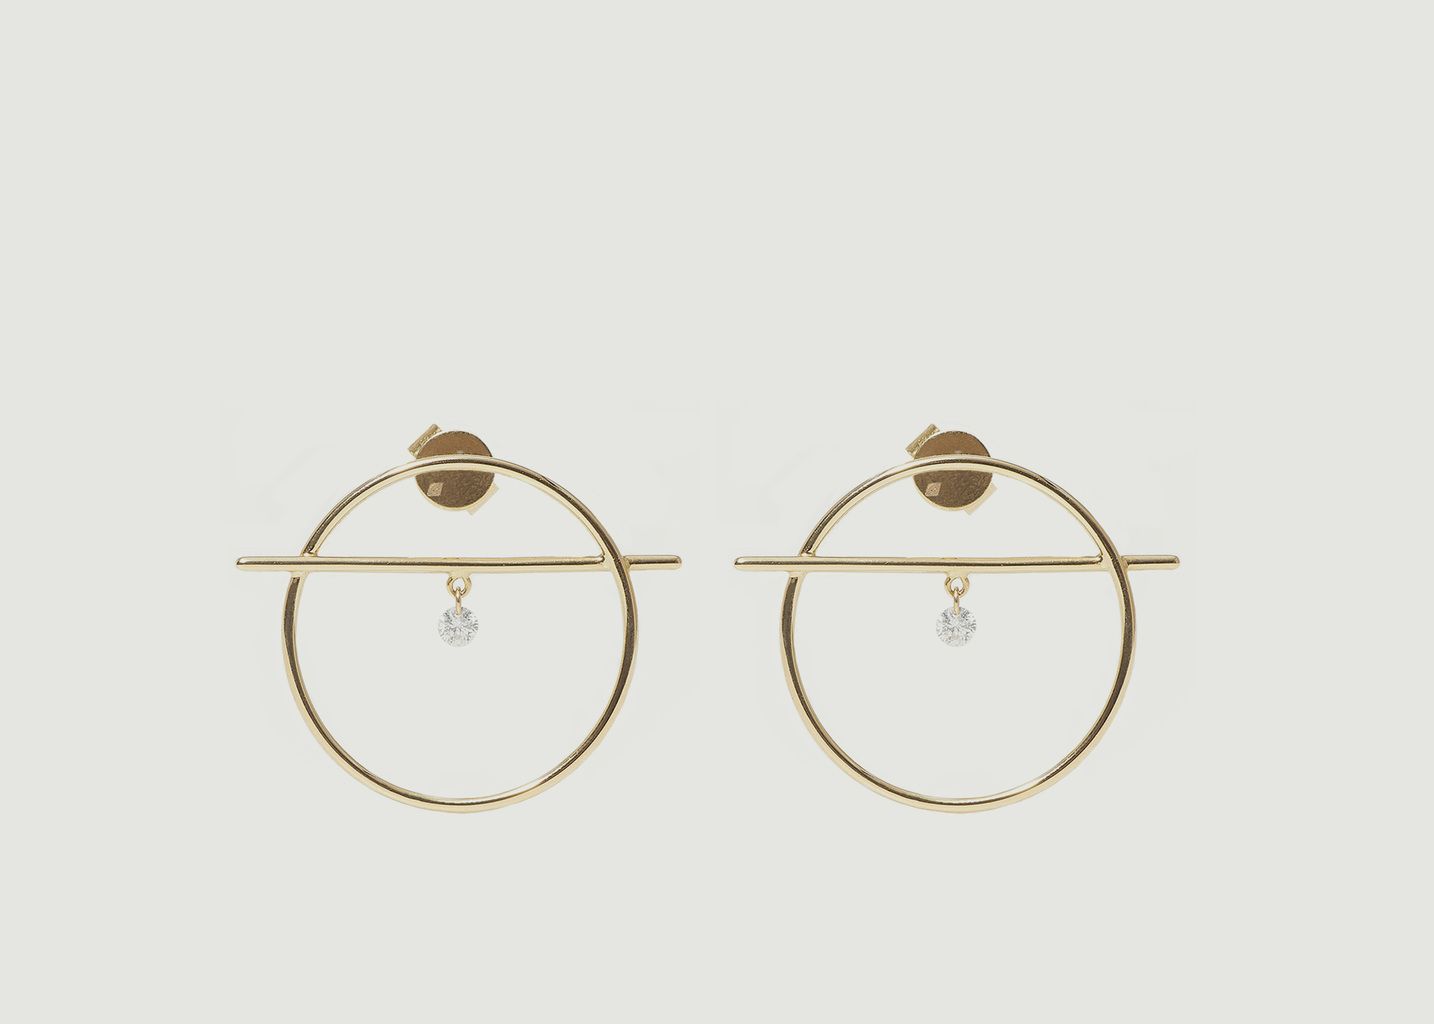 Fibule XS gold and diamond dangling earrings - Persée Paris